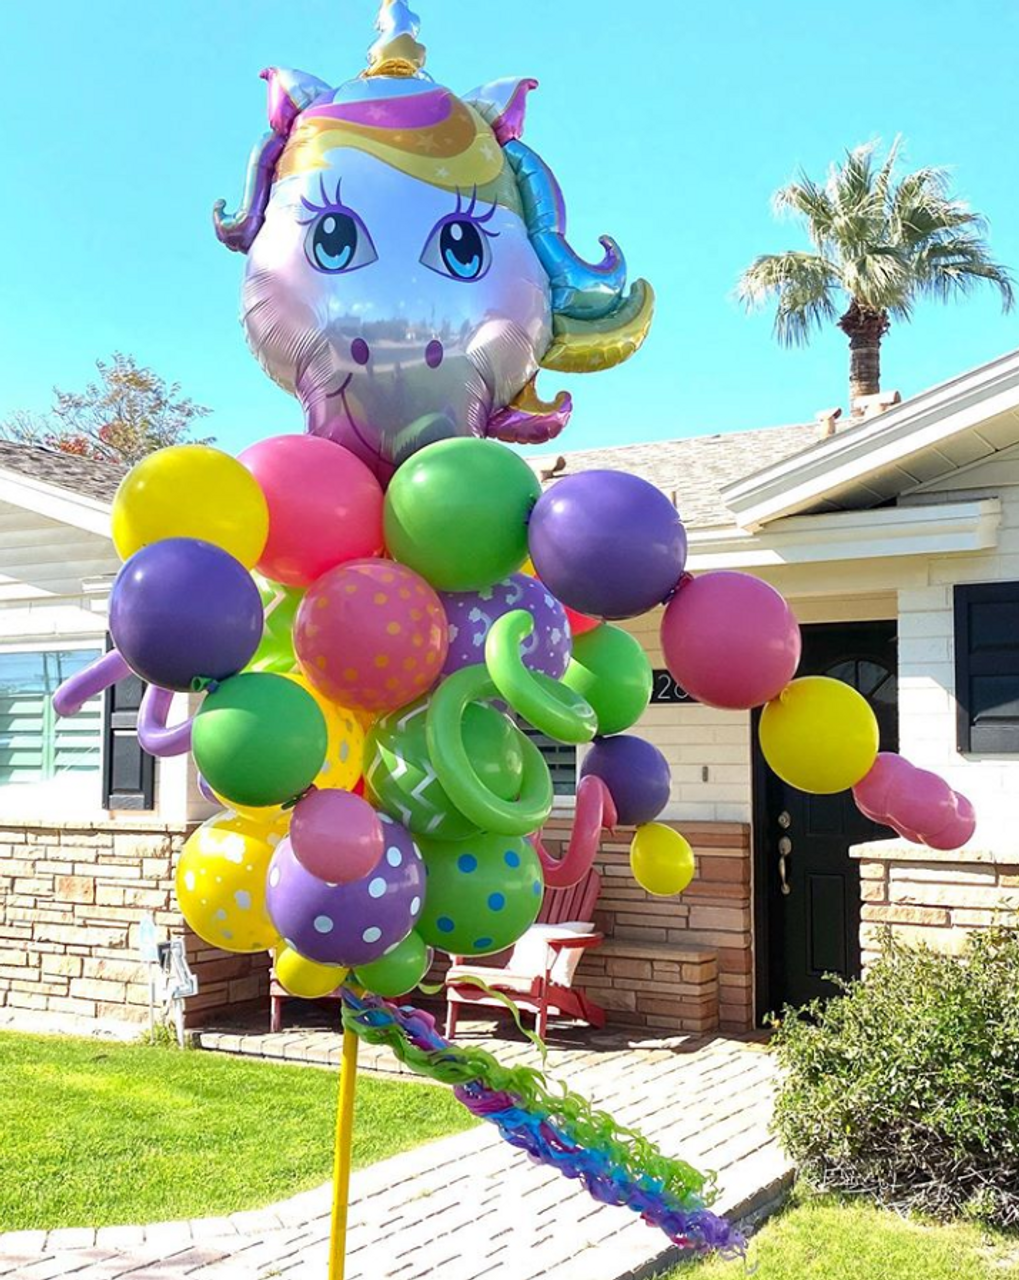 Happy Birthday Unicorn Balloon 